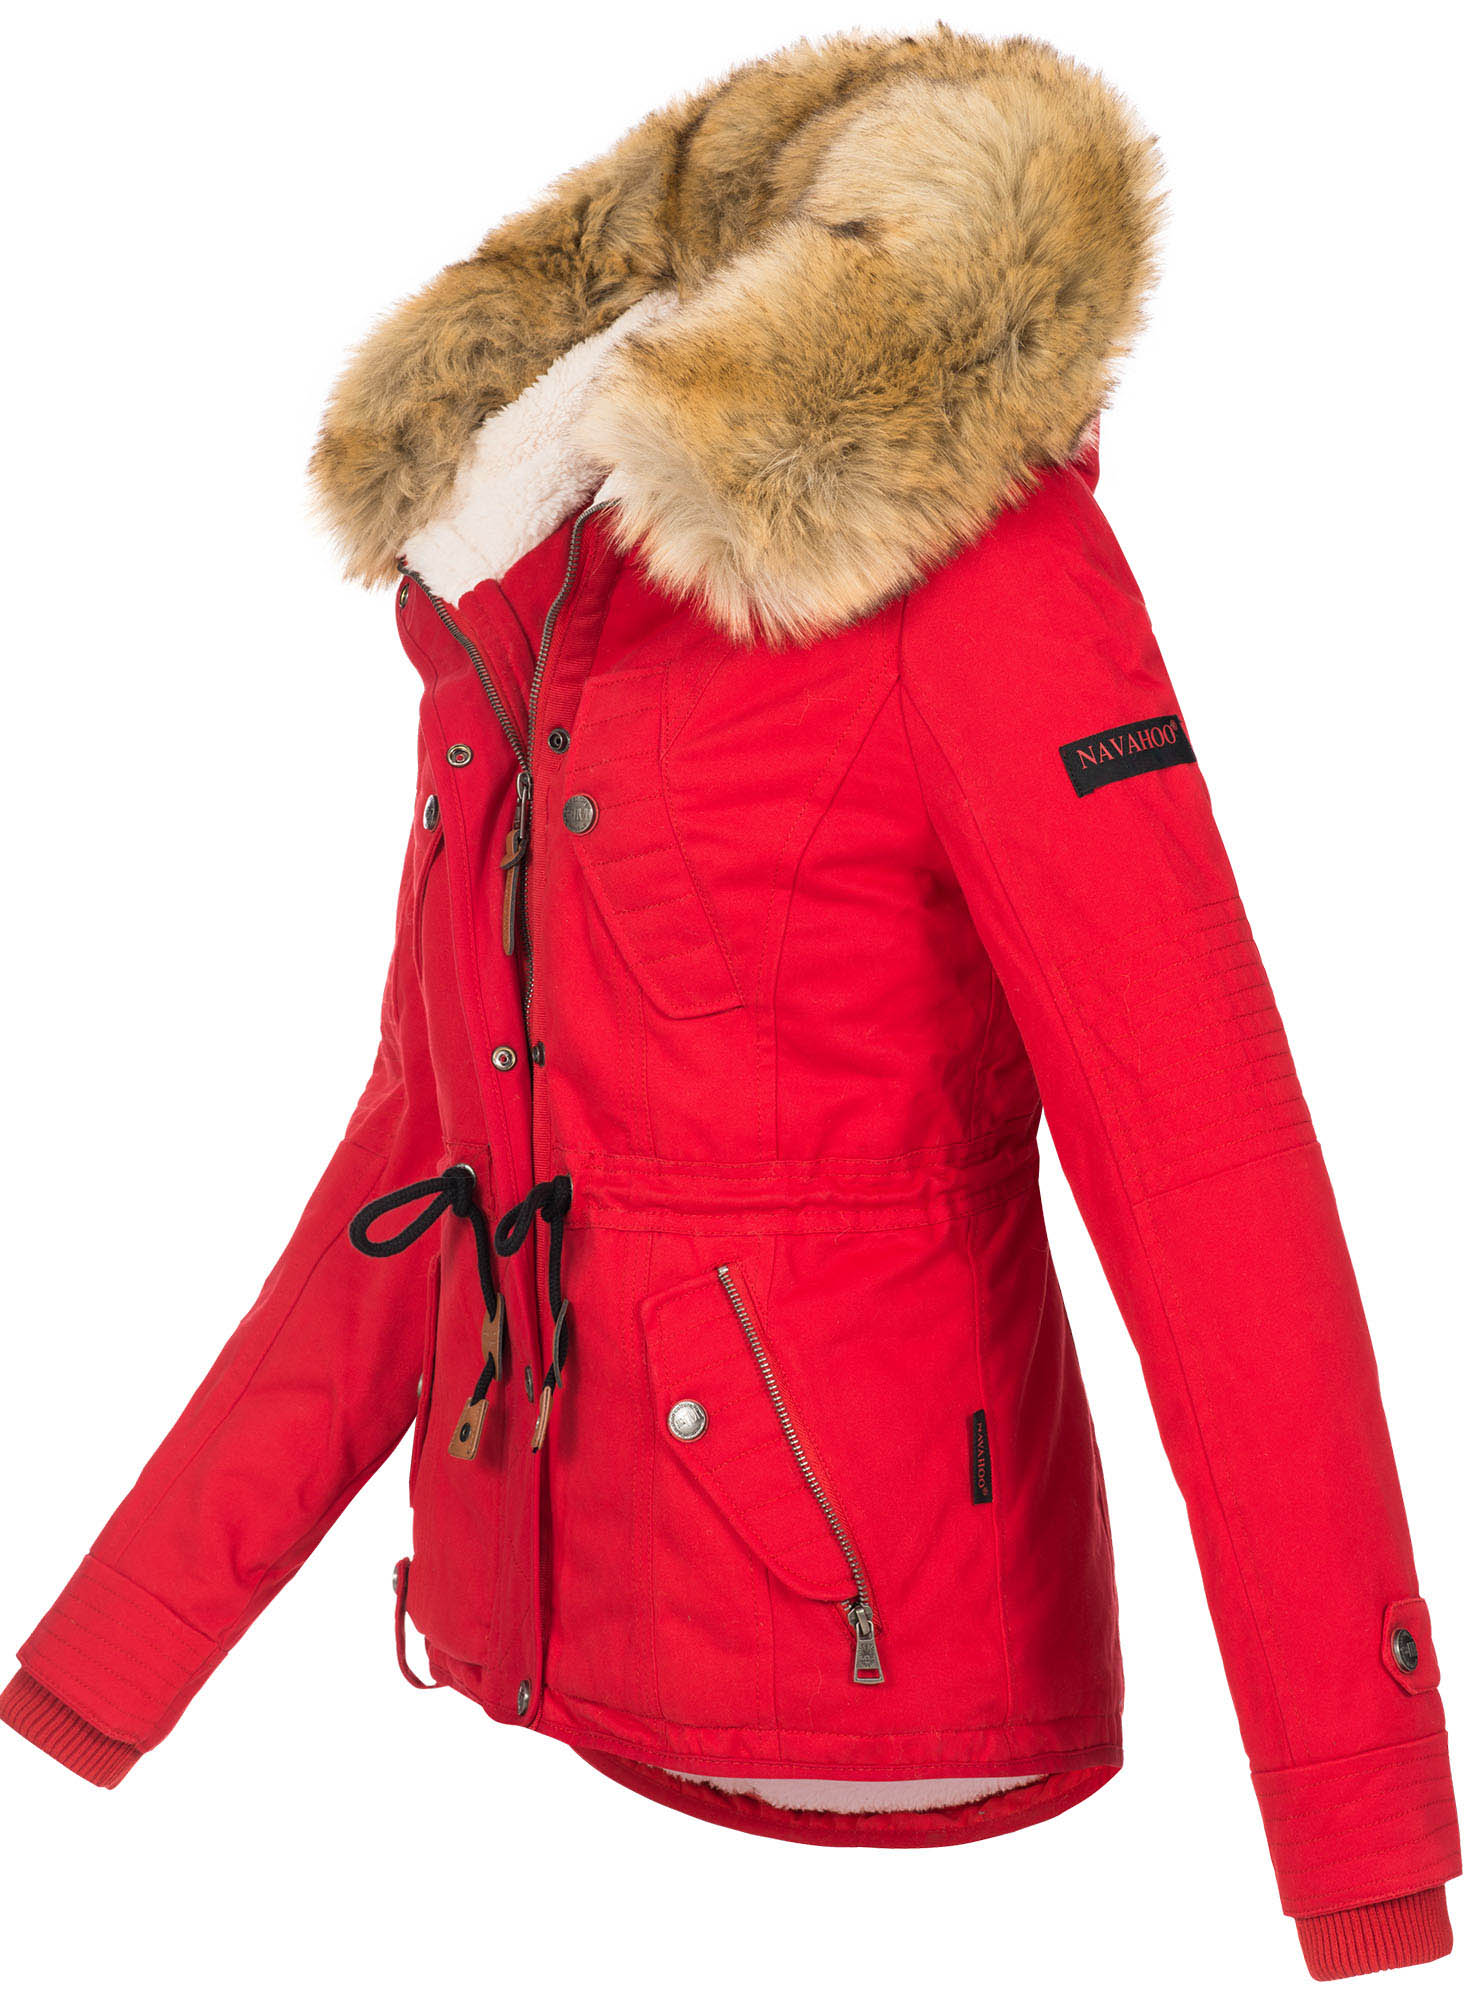 Women's winter short coat to keep warm